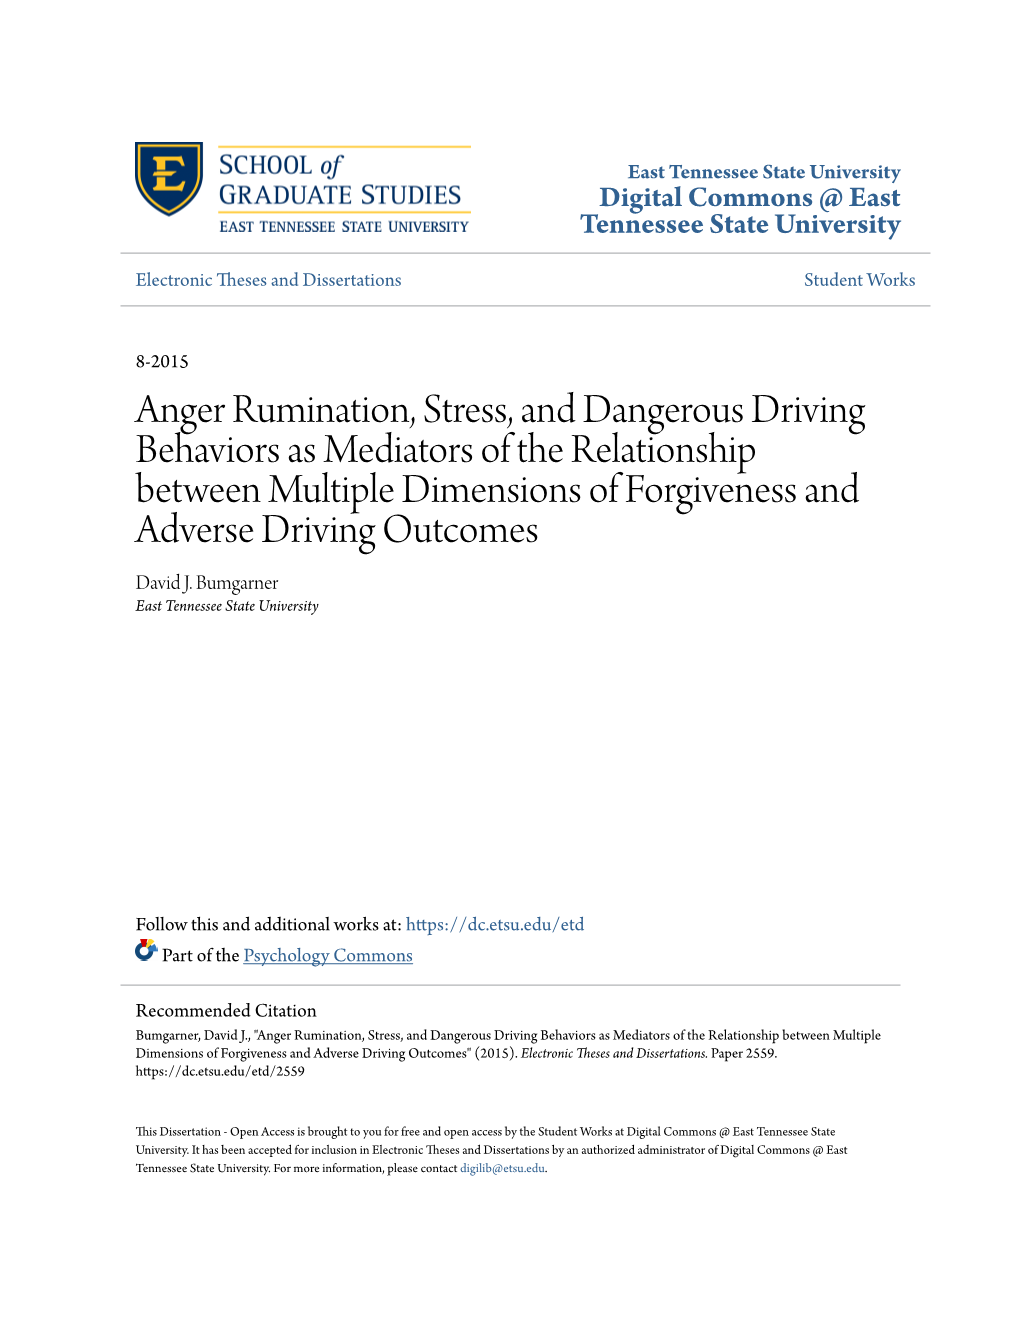 Anger Rumination, Stress, and Dangerous Driving Behaviors As